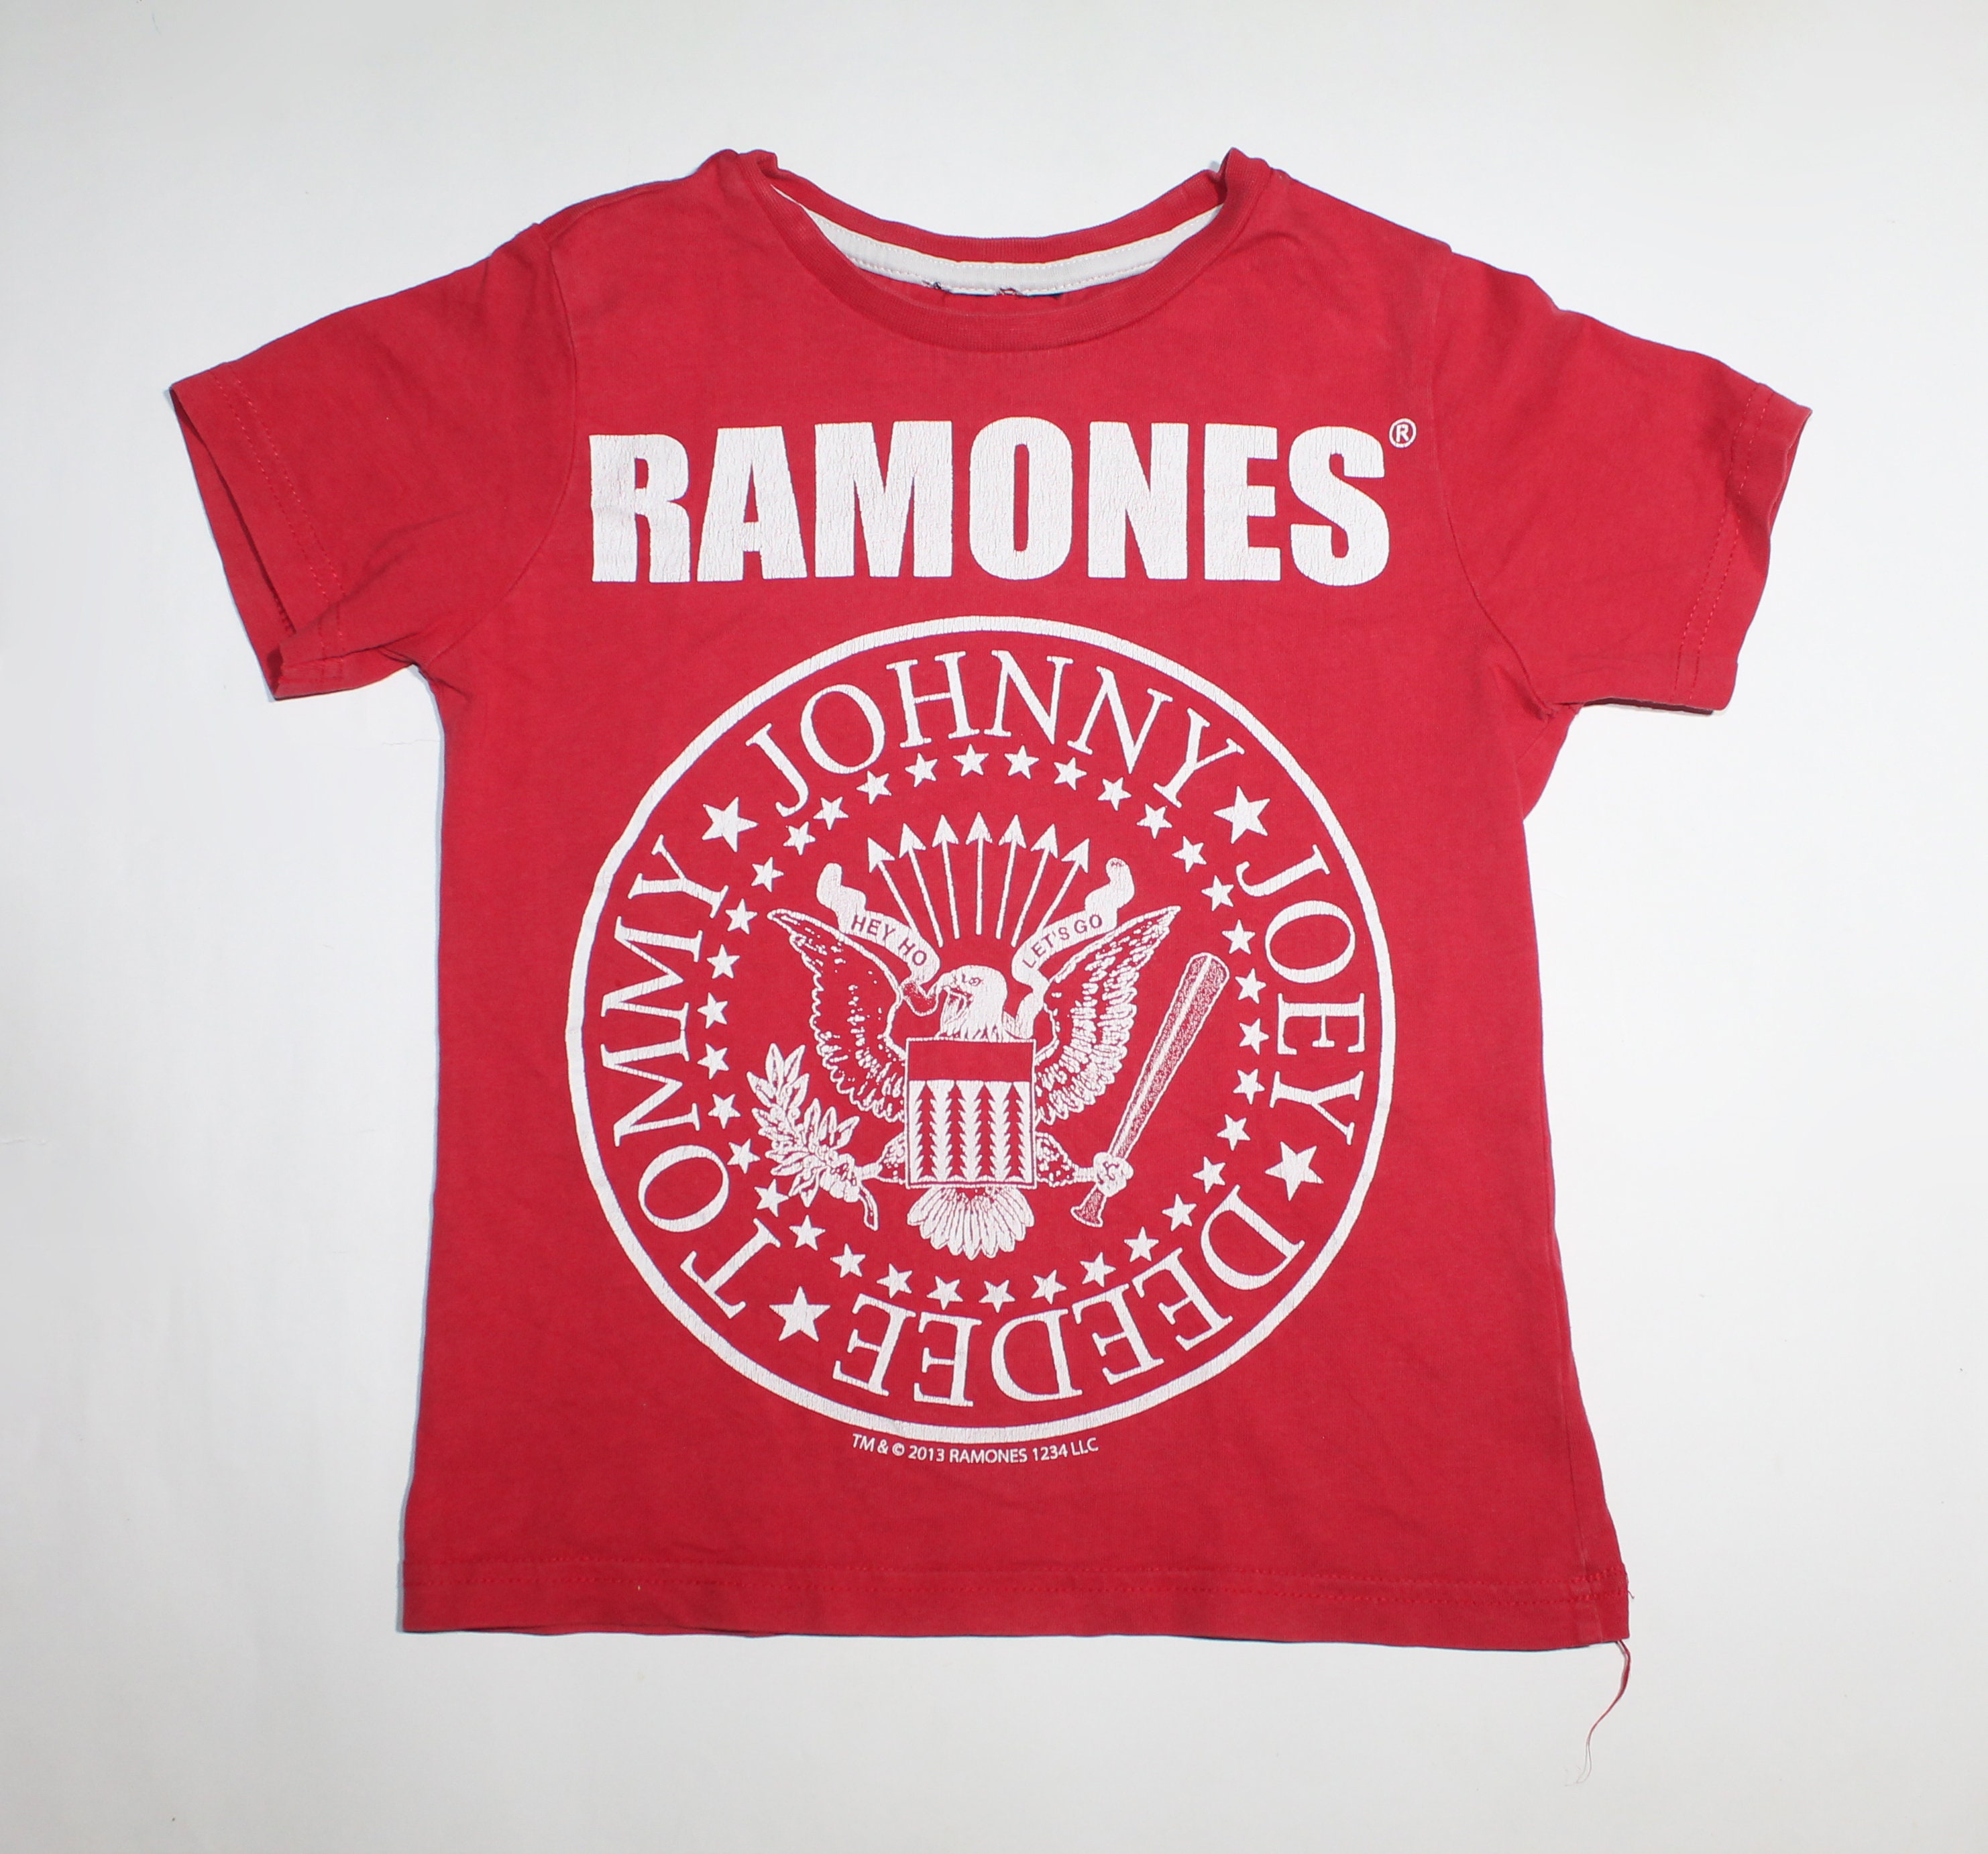 Ramones Kids Shirt American Punk Rock Band Punk Pop Kids Size 5-6 Yrs 110-116 cm